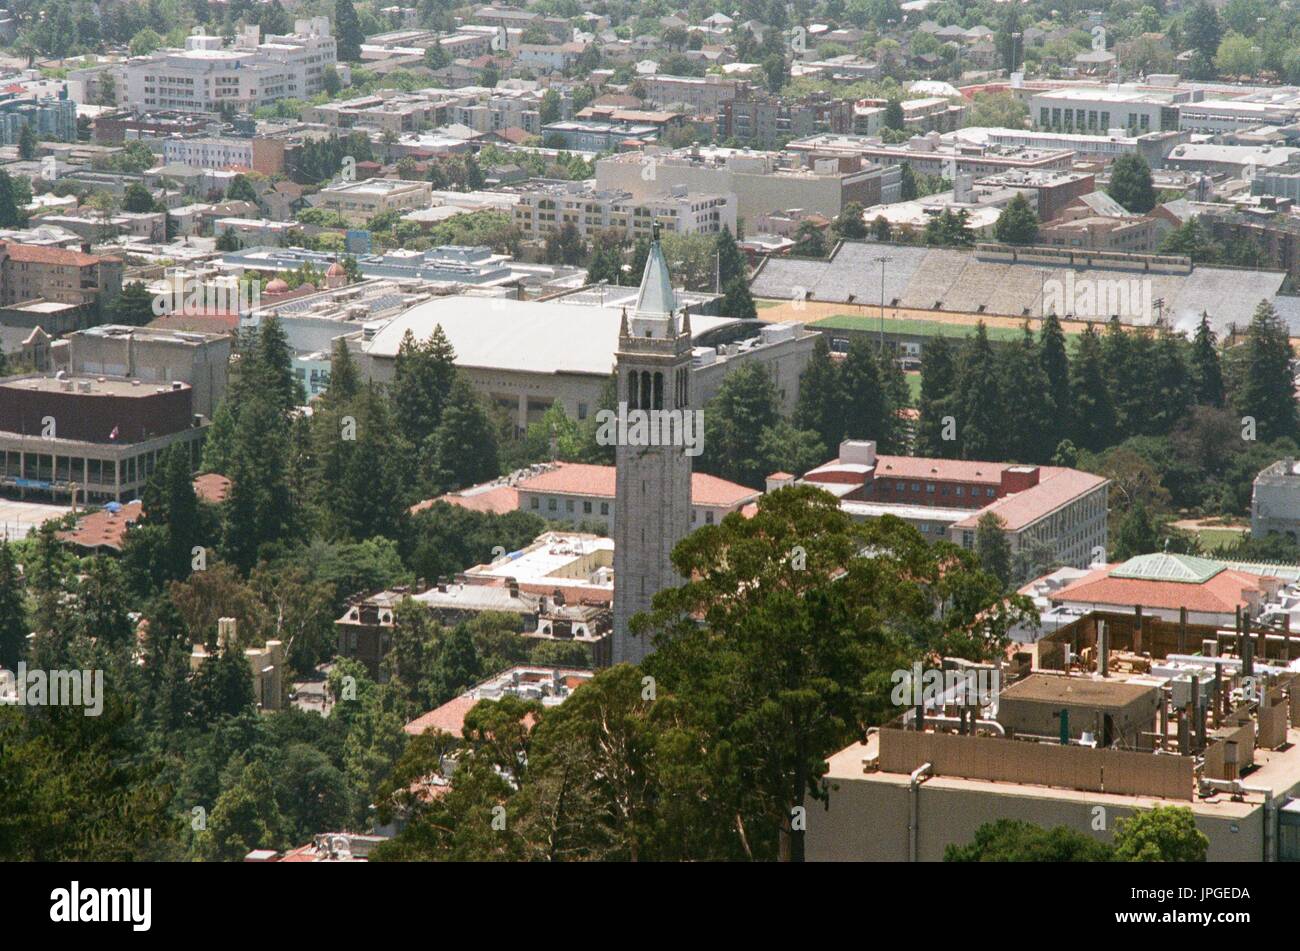 Aerial view of the campus of the University of California Berkeley (UC Berkeley), including the campanile clock tower, Berkeley, California, June 19, 2017. Stock Photo